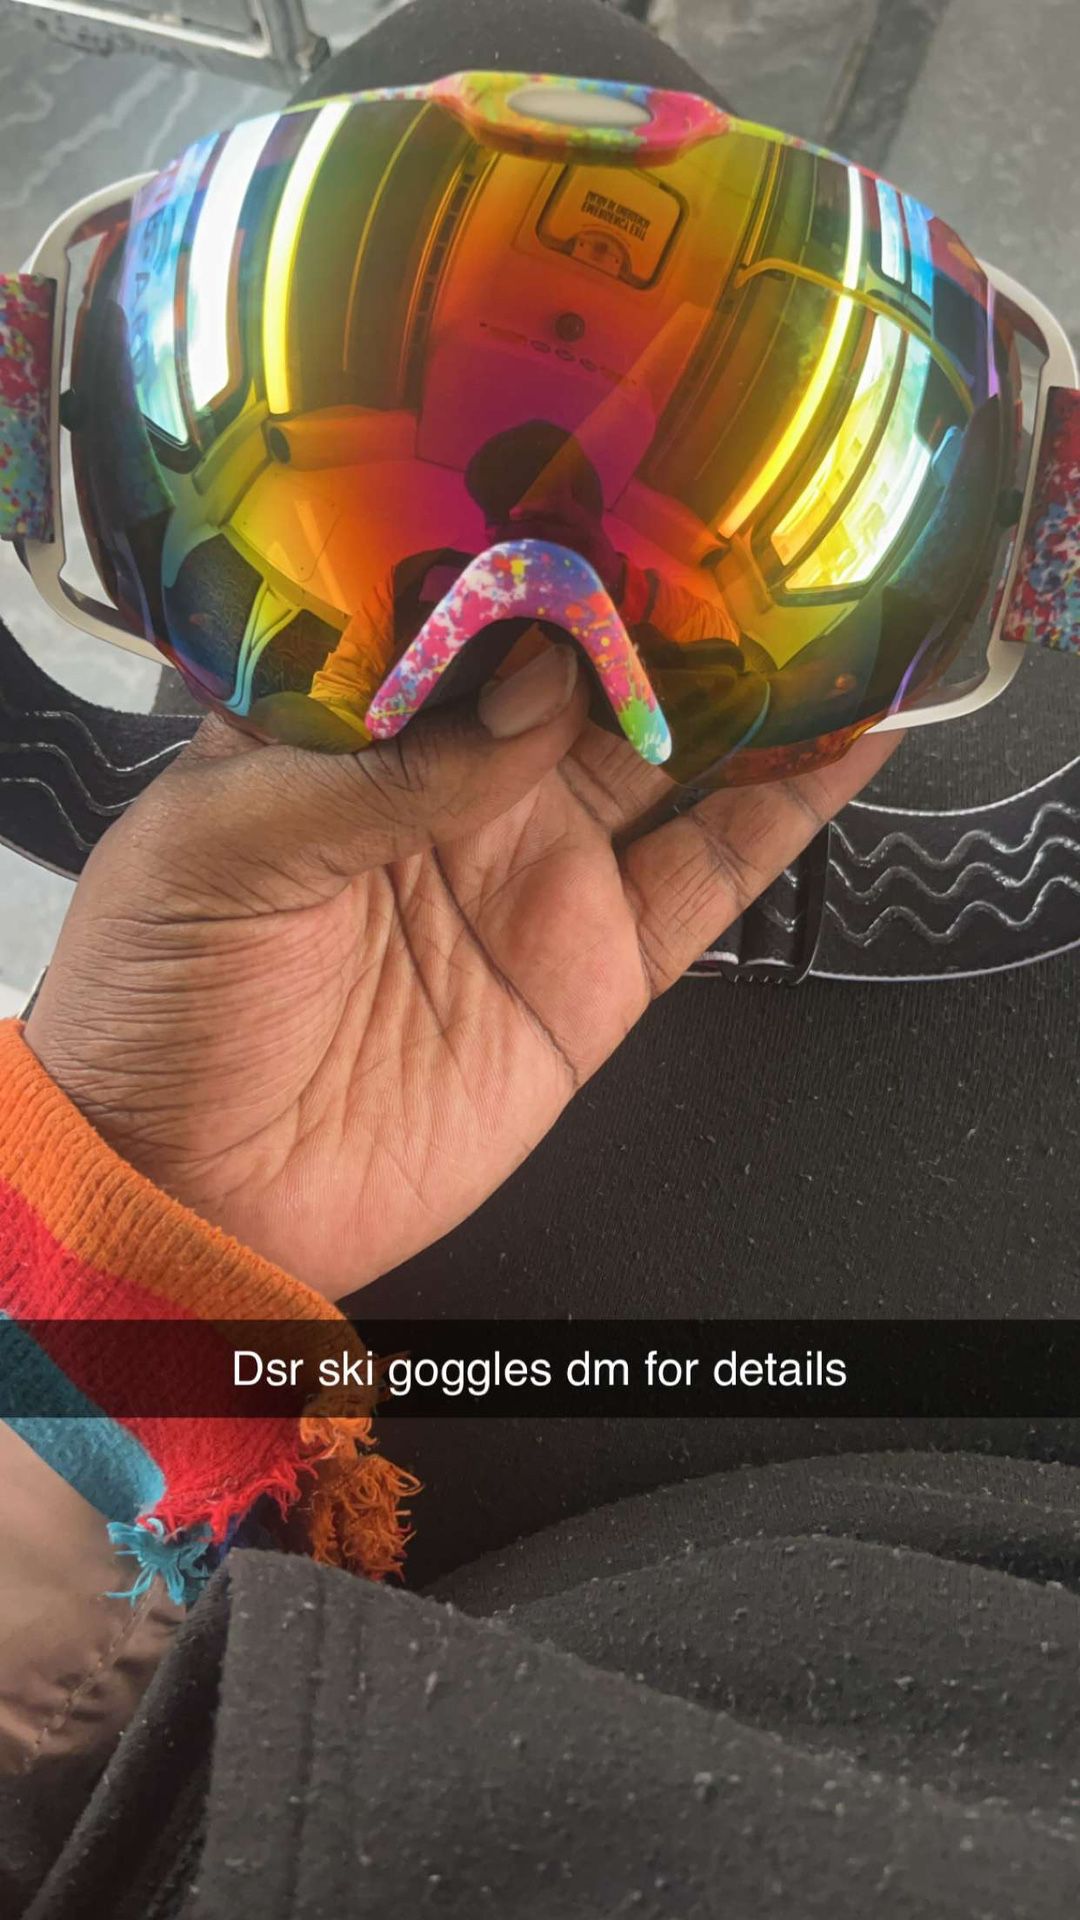 DSR Ski Goggles